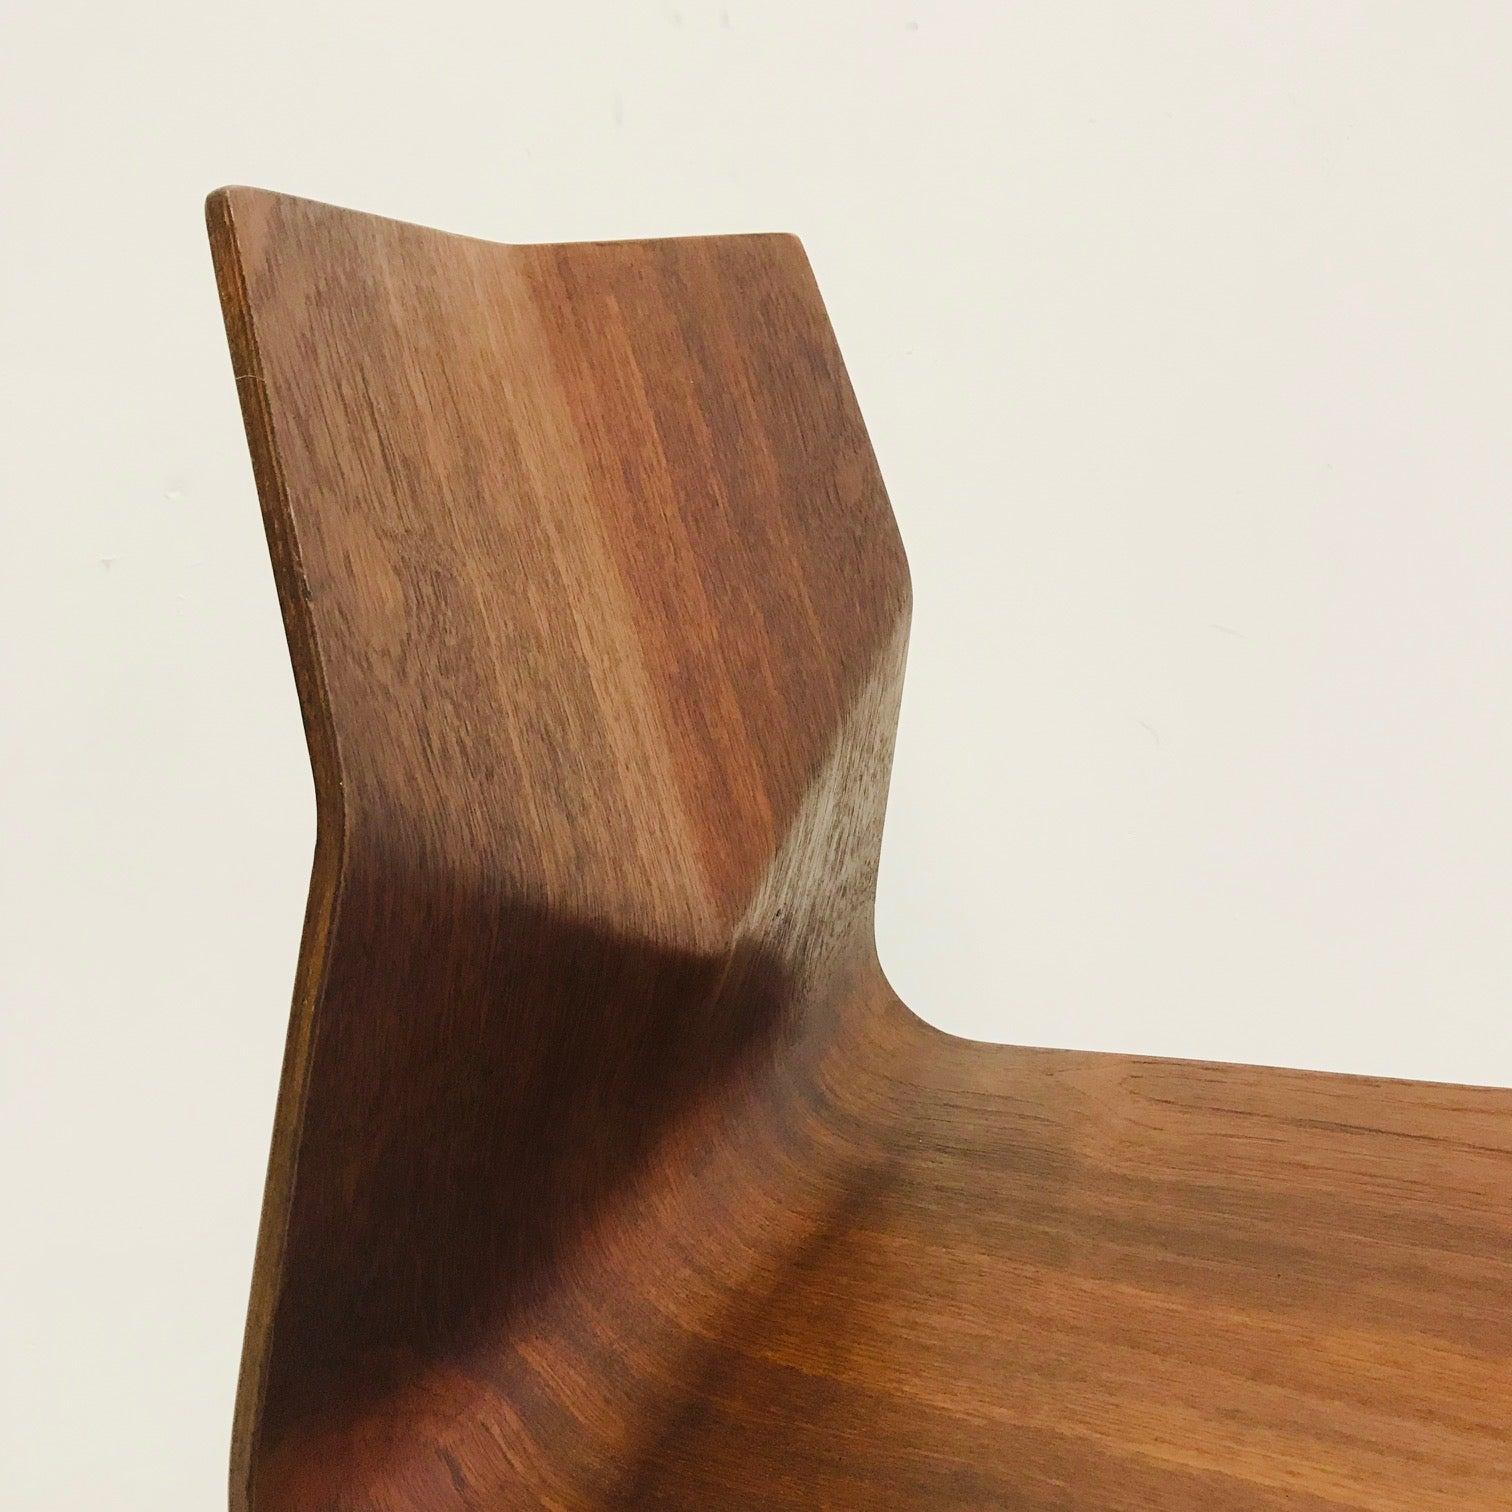 René-Jean Caillette
Diamond chair 
Edition Steiner
Elm veneered molded plywood, 
steel 31.5 x 18.11 x 17.32 in.